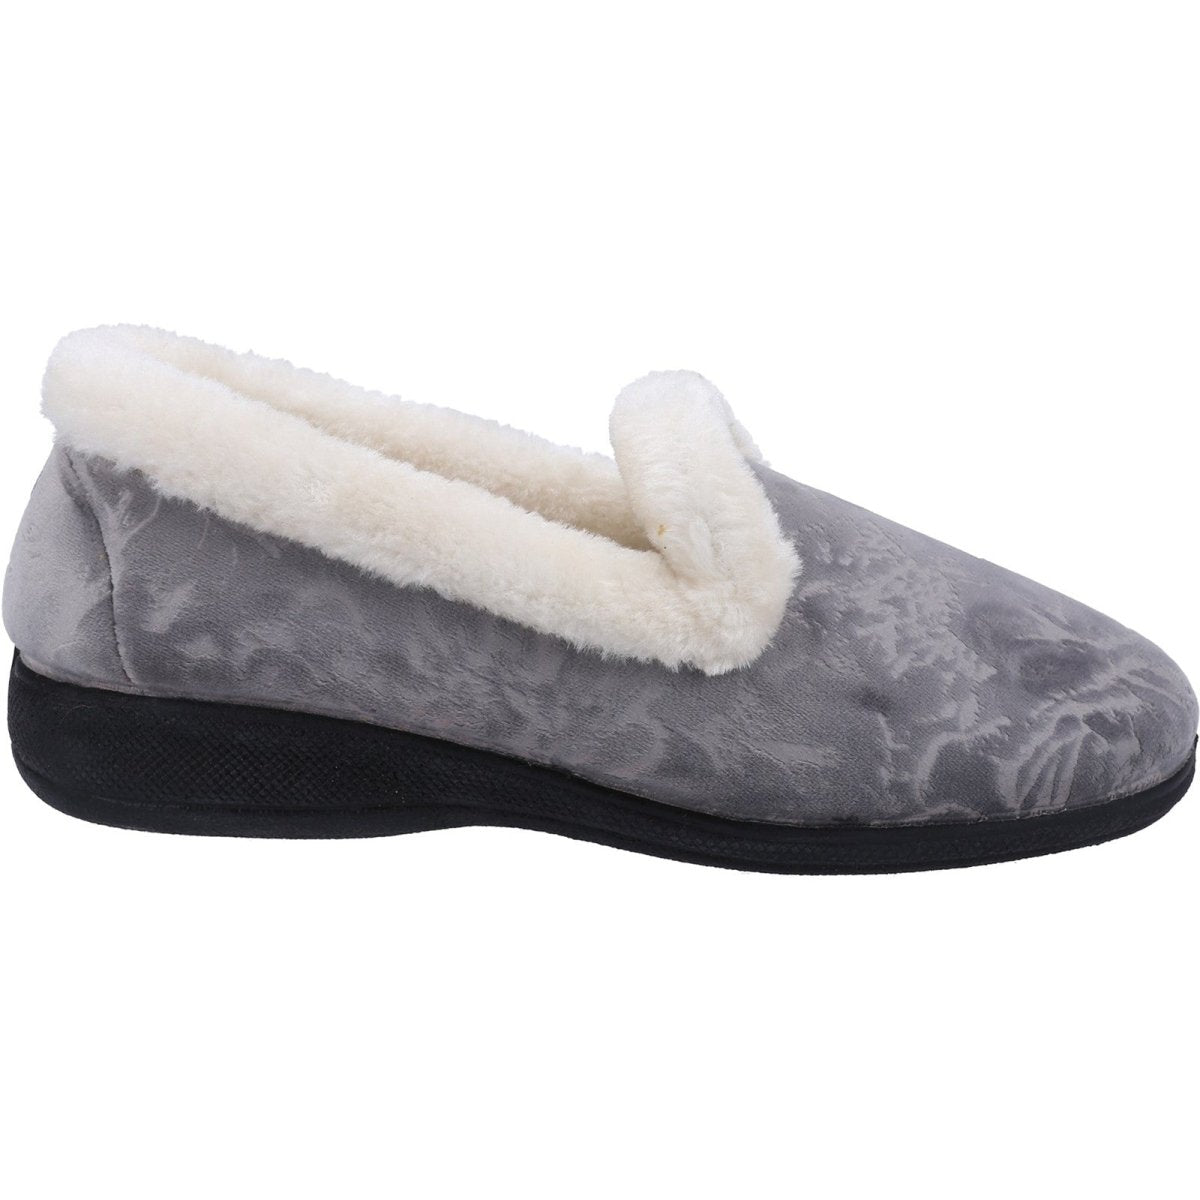 Fleet & Foster Adelaide Memory Foam Classic Ladies Slippers - Shoe Store Direct